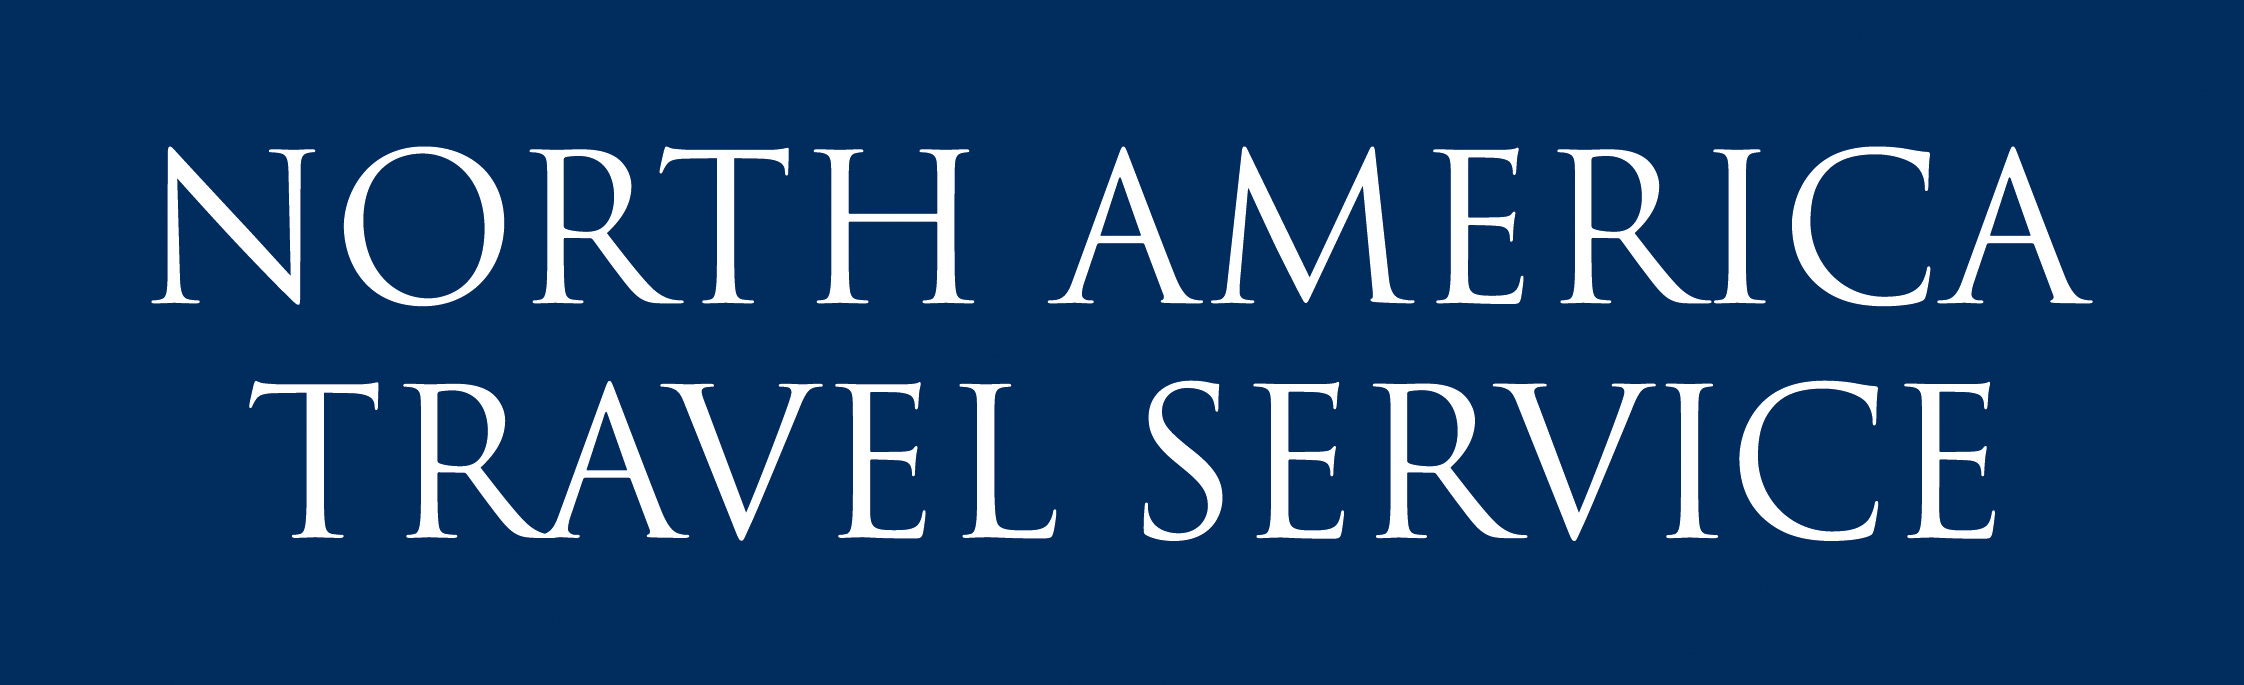 north america travel service logo